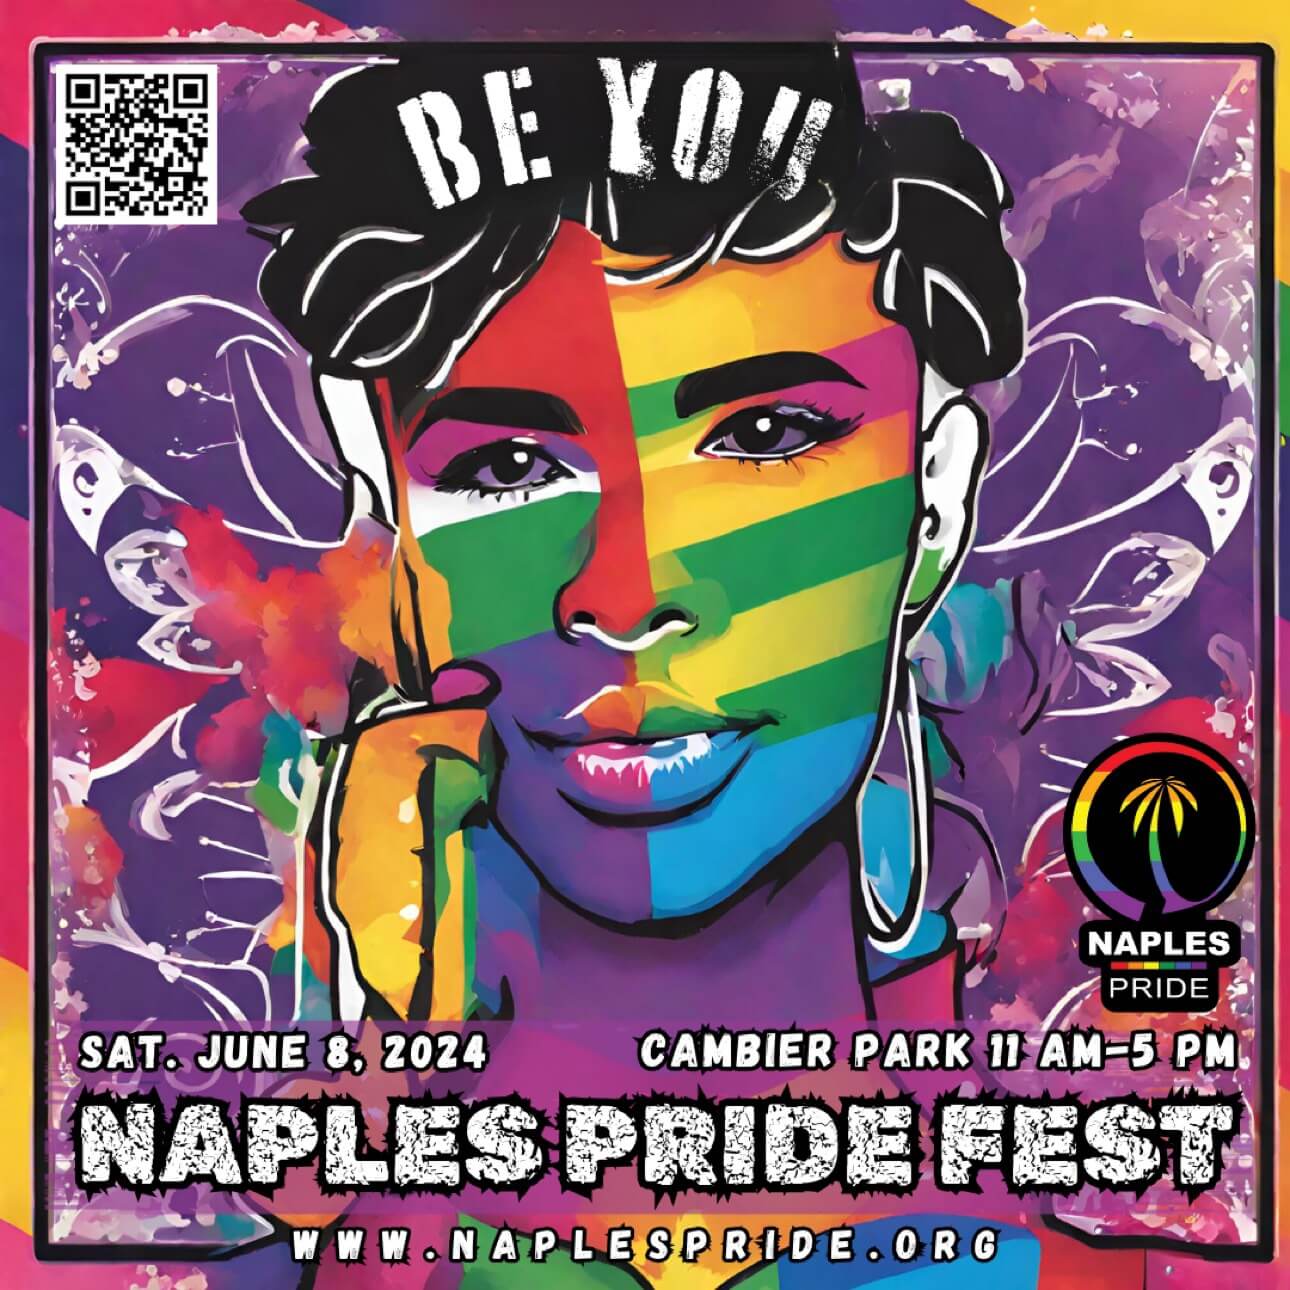 Naples PrideFest